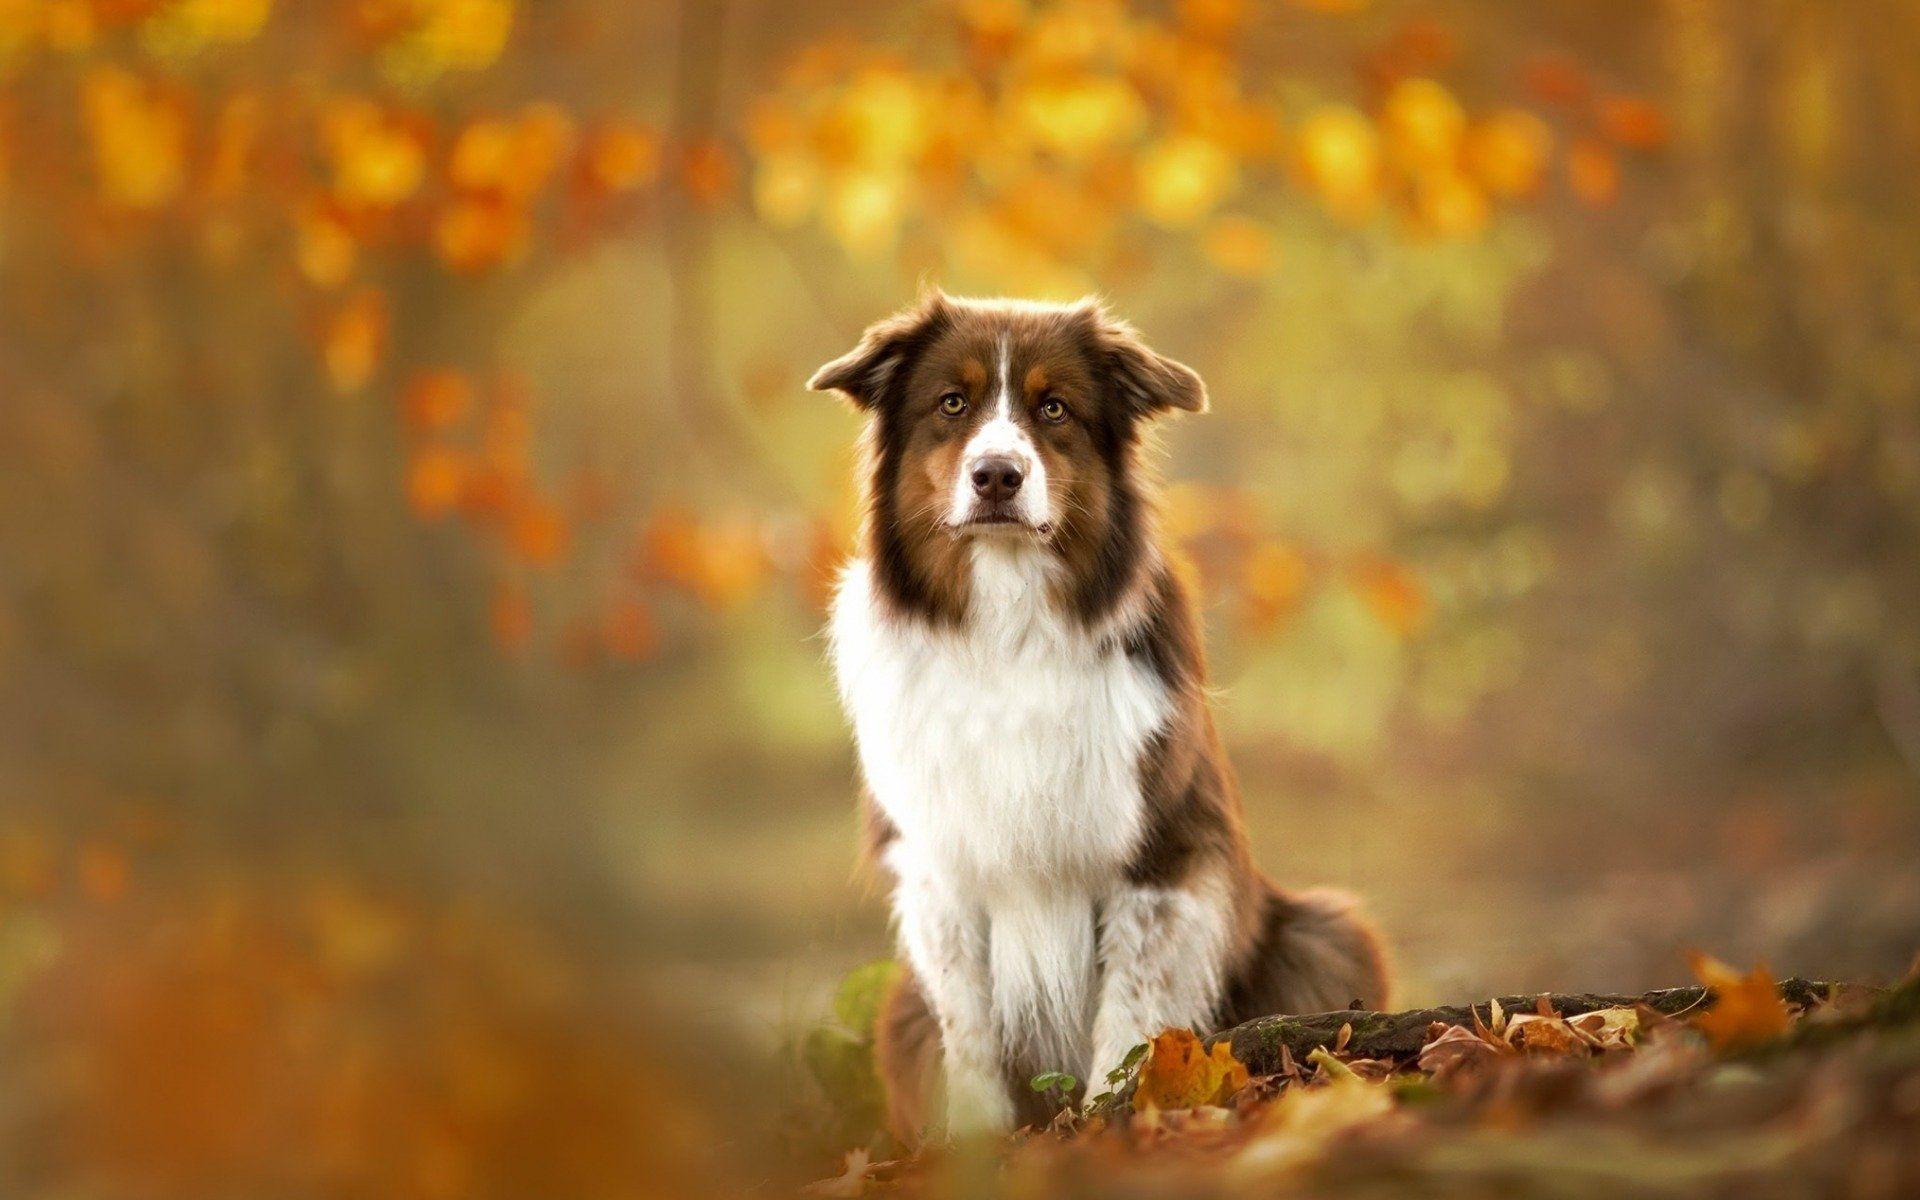 Download wallpaper 800x1200 australian shepherd dog autumn foliage  iphone 4s4 for parallax hd background